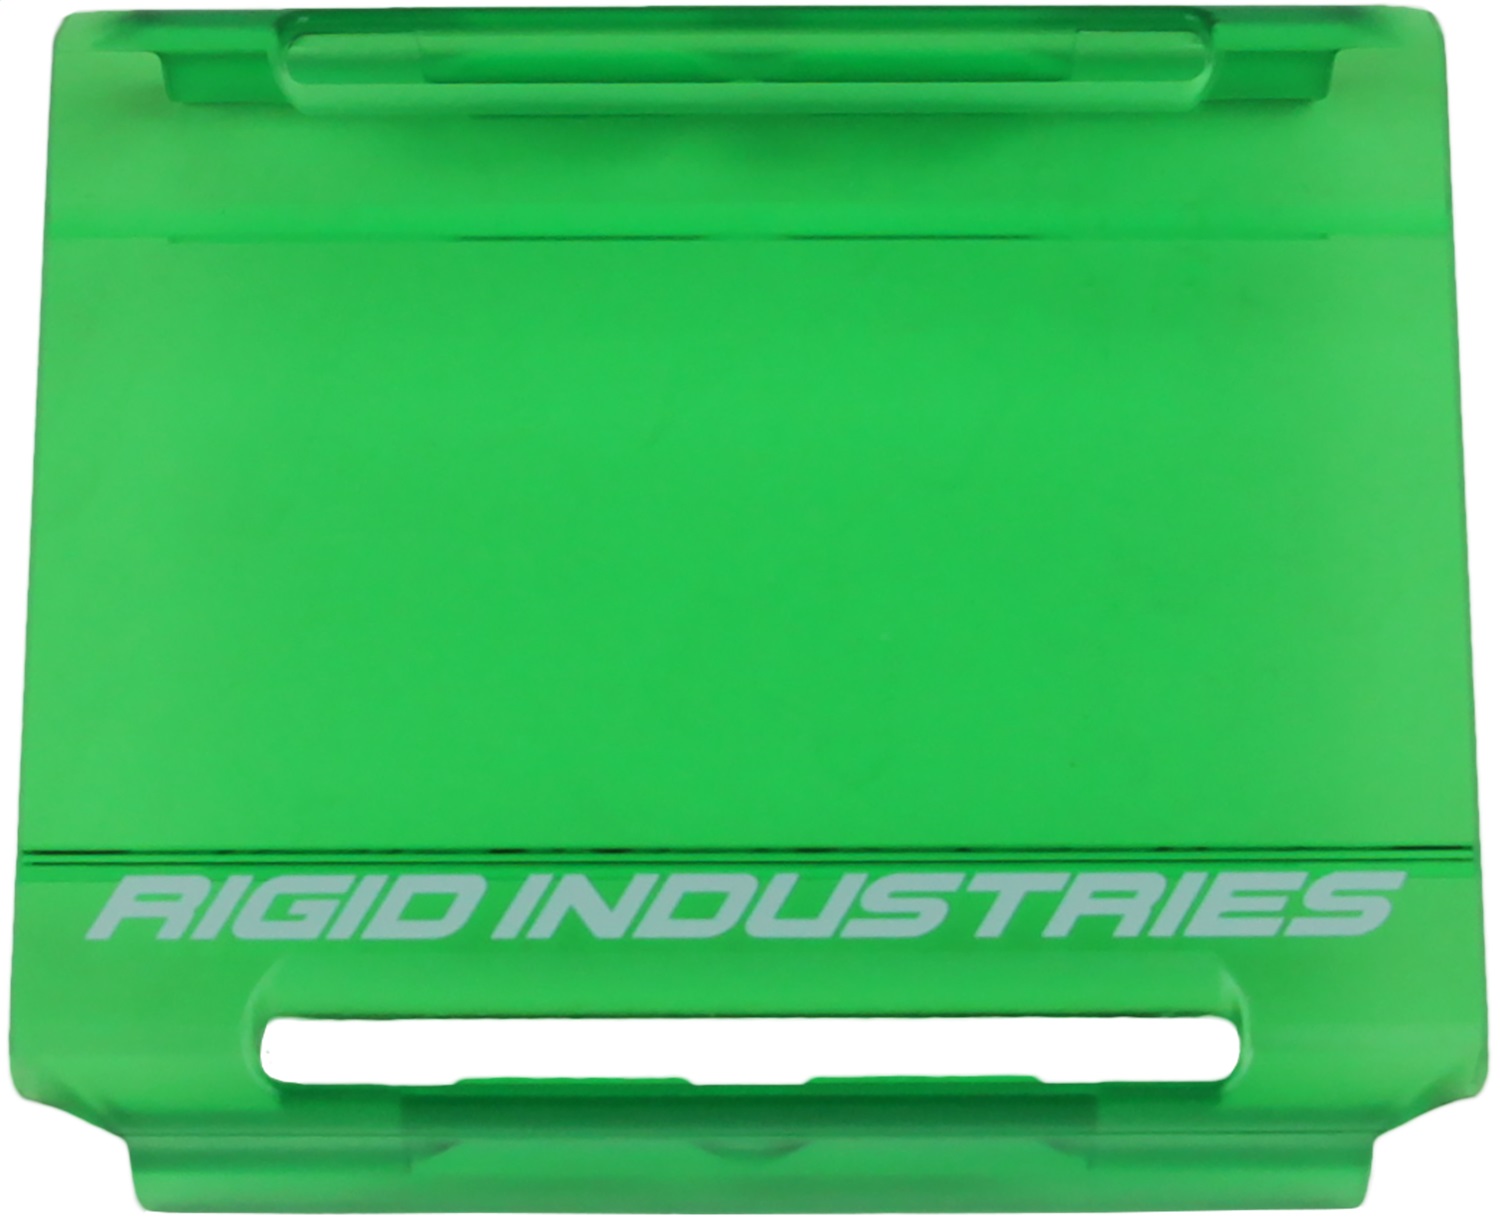 Rigid Industries Rigid Industries 10497 EM Series; Light Cover